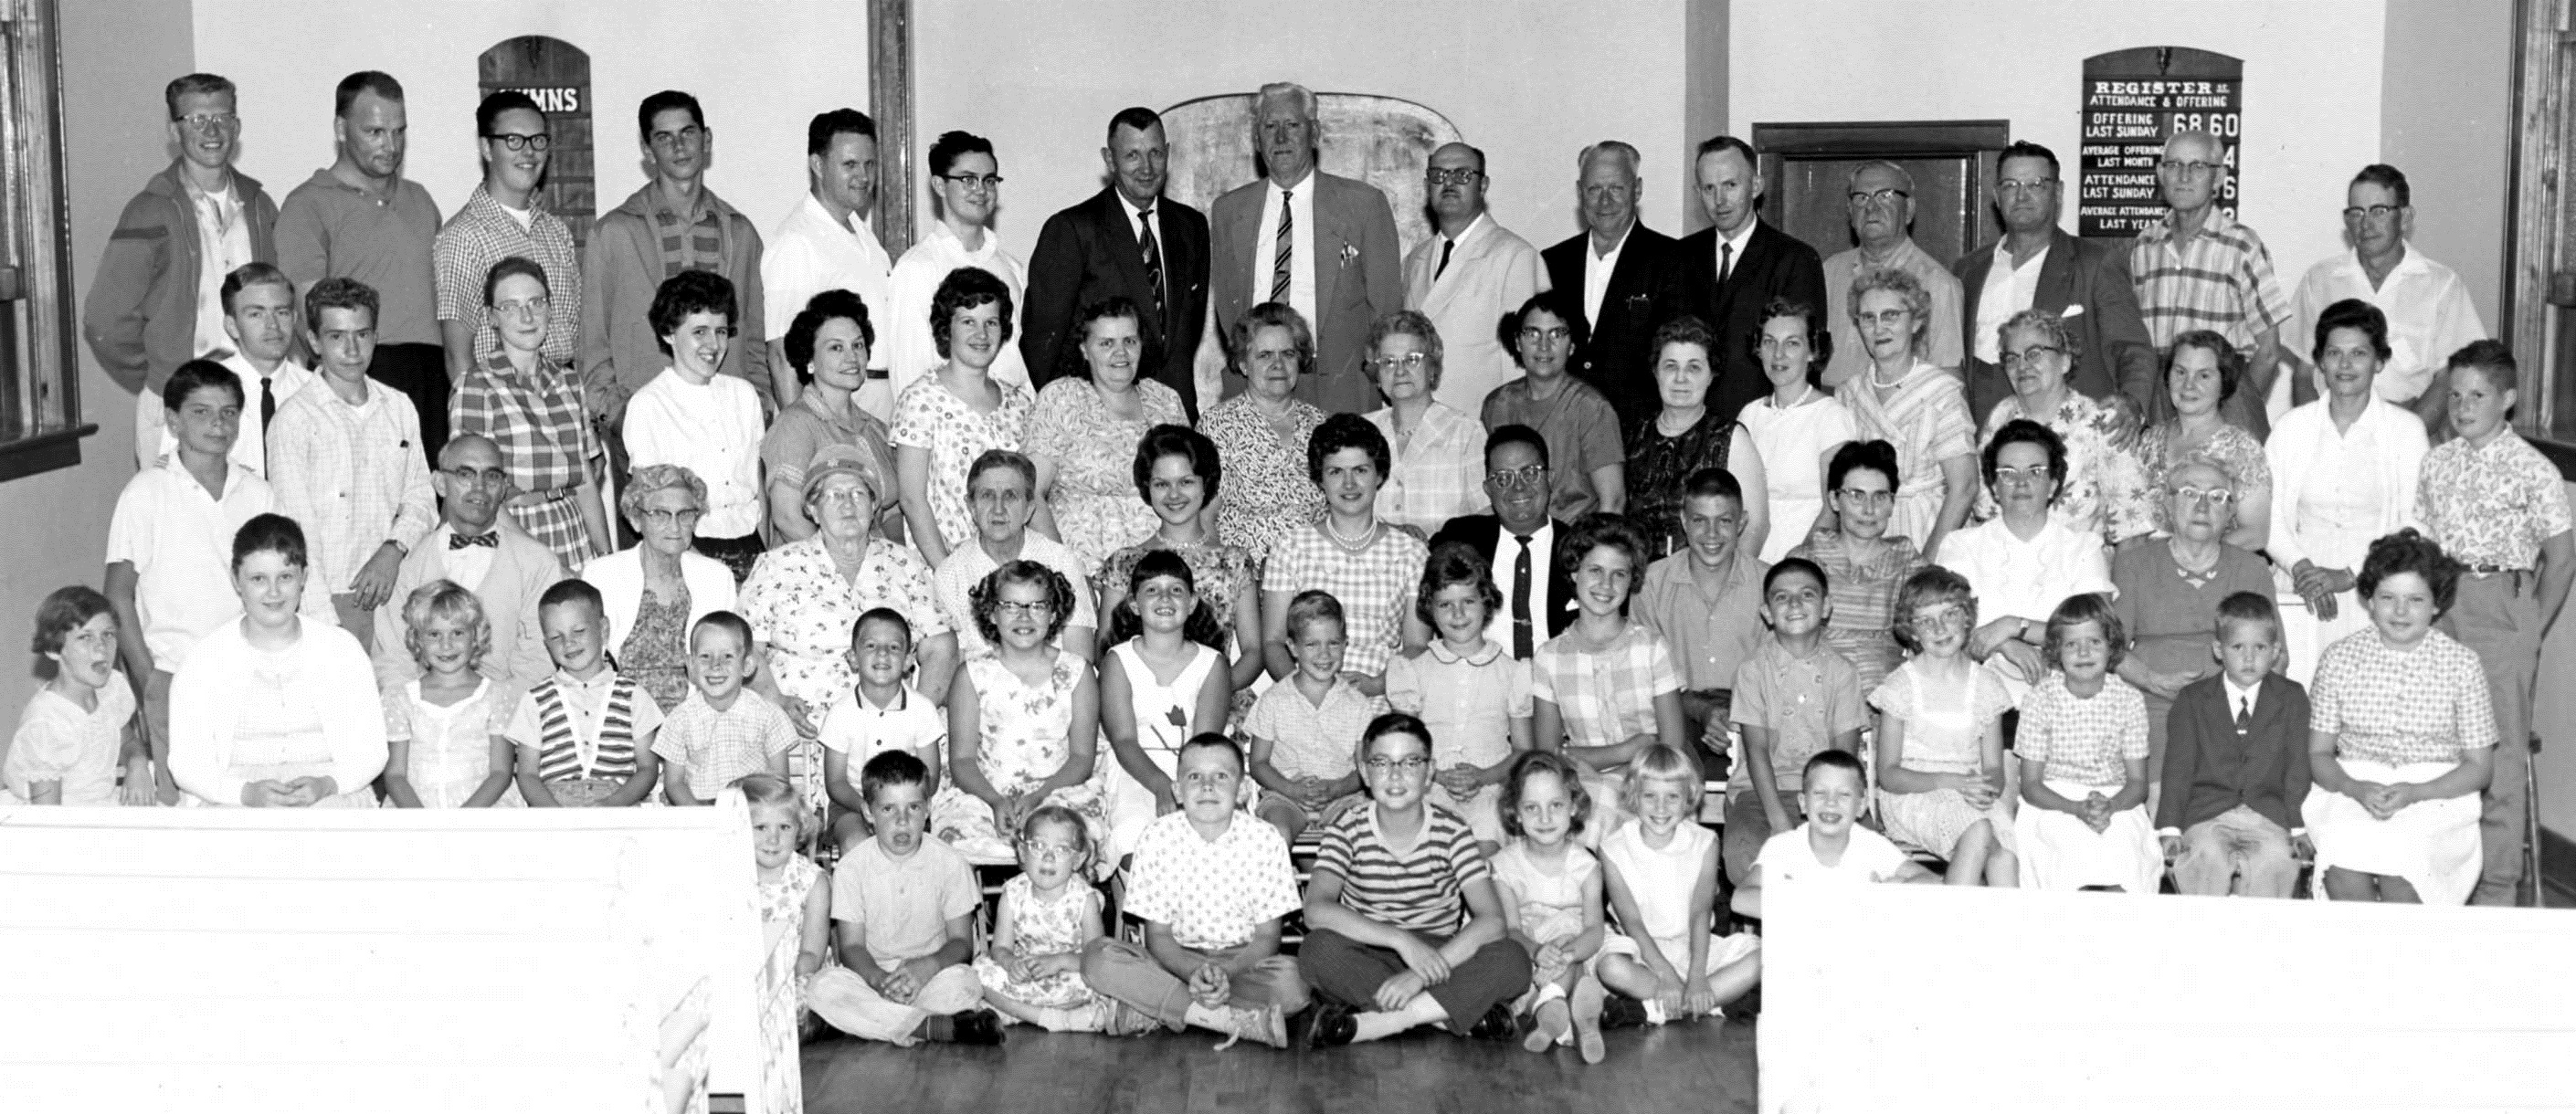 Members of the church of Christ in Sarnia Ontario in 1962